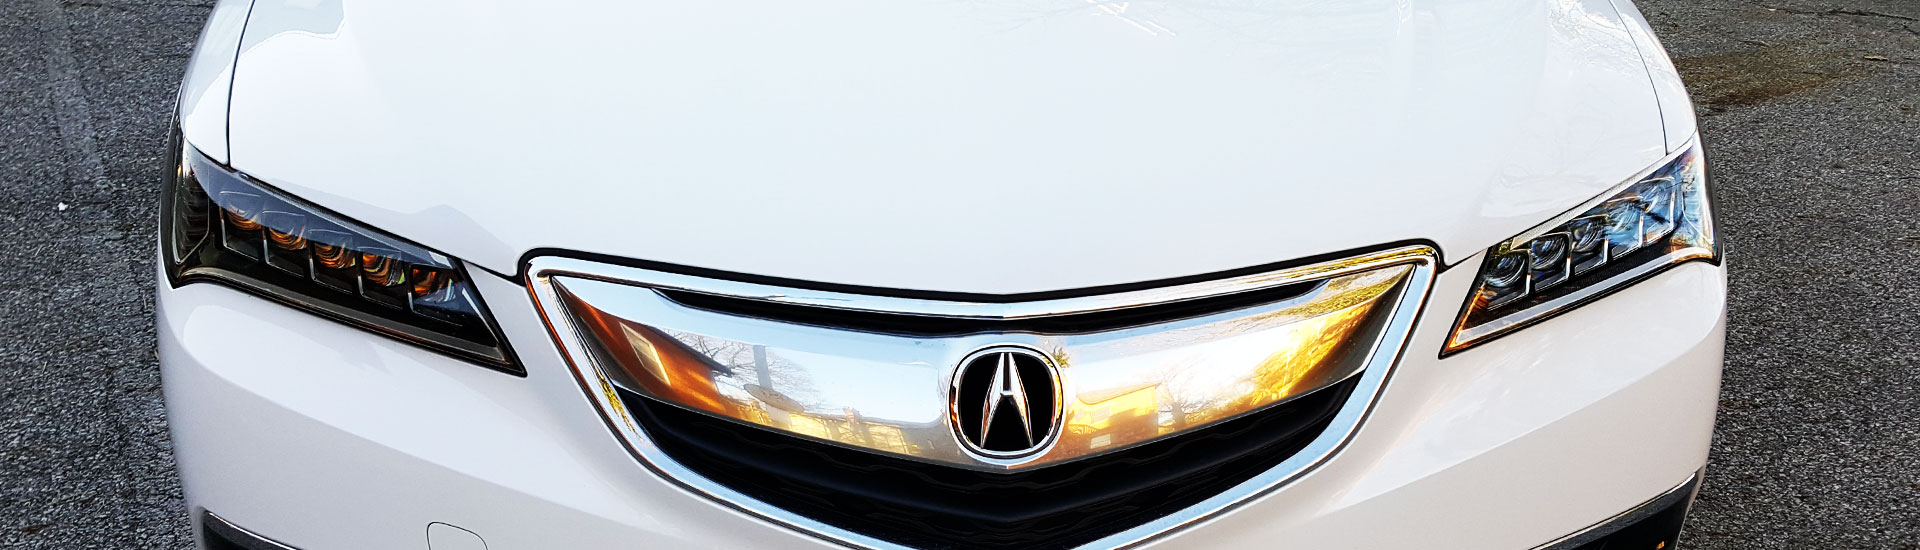 Acura TLX Headlight Tint Covers